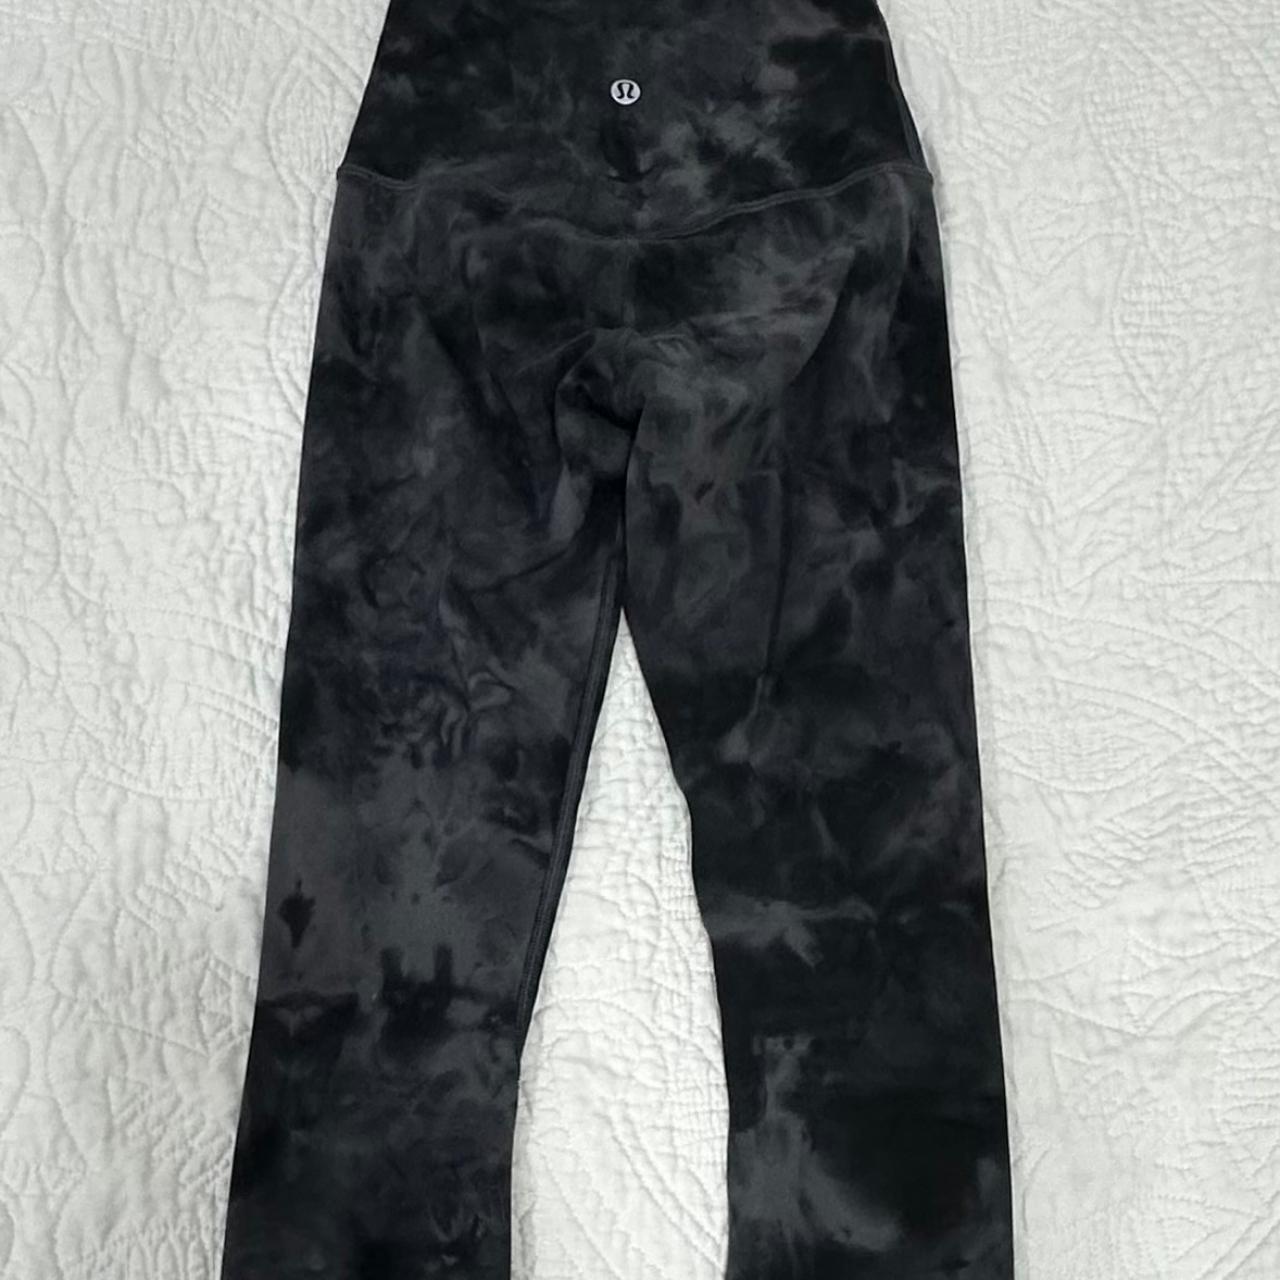 Lululemon align diamond dye leggings, Size 2, 25 in